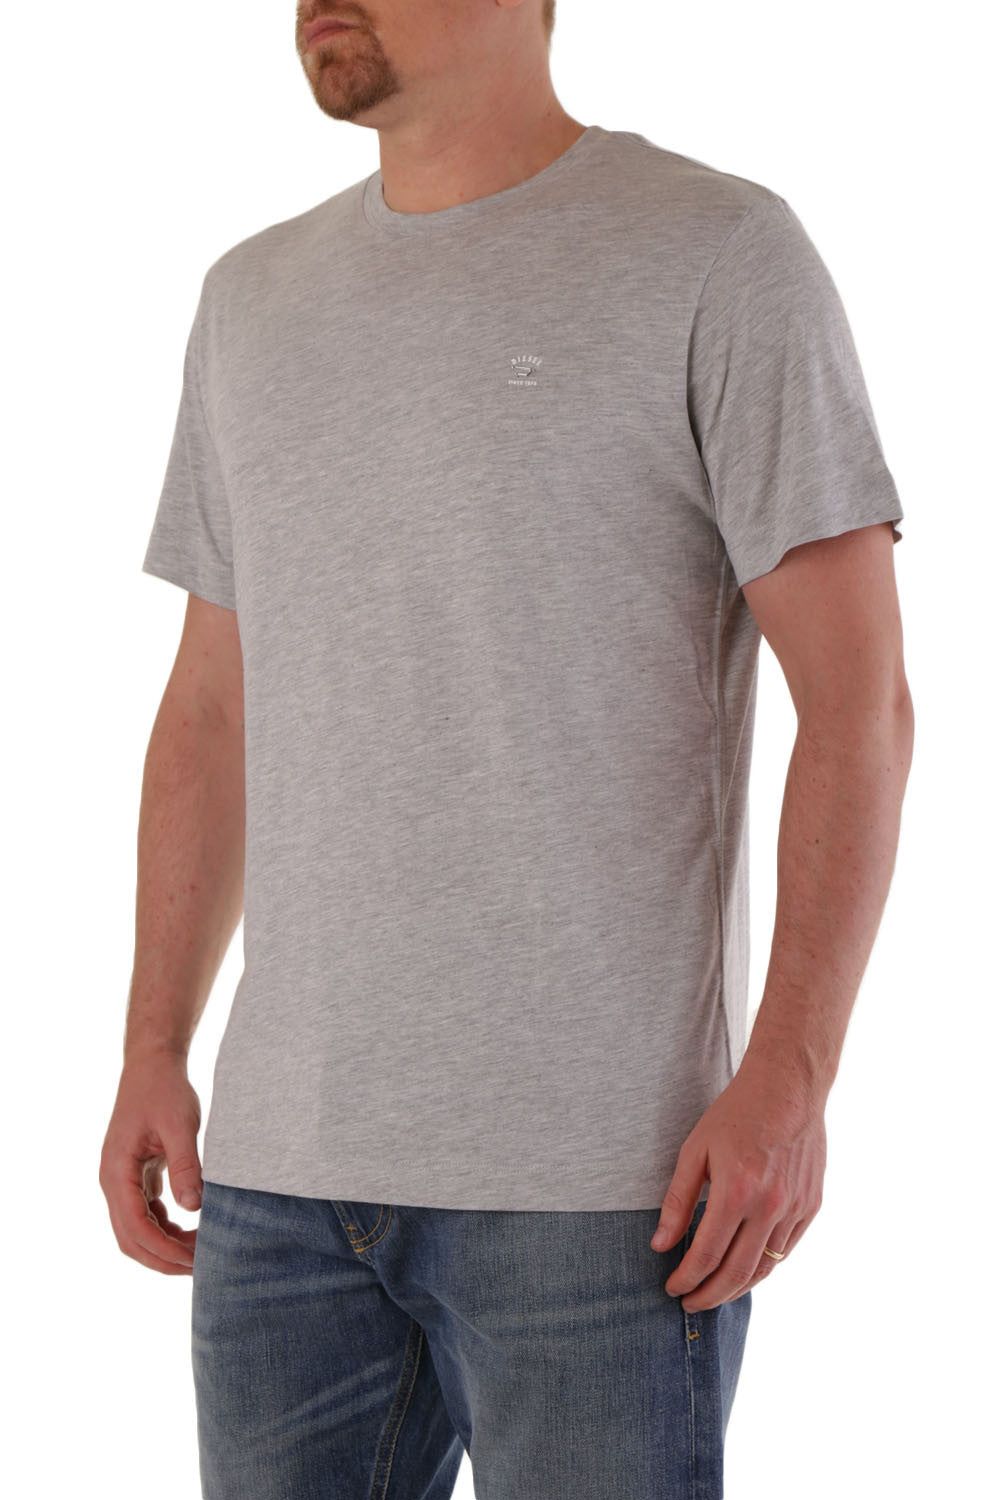 Brand: Diesel   Gender: Men   Type: T-shirts   Color: Grey   Neckline: Round Neck   Sleeves: Short Sleeve   Season: Spring/summer